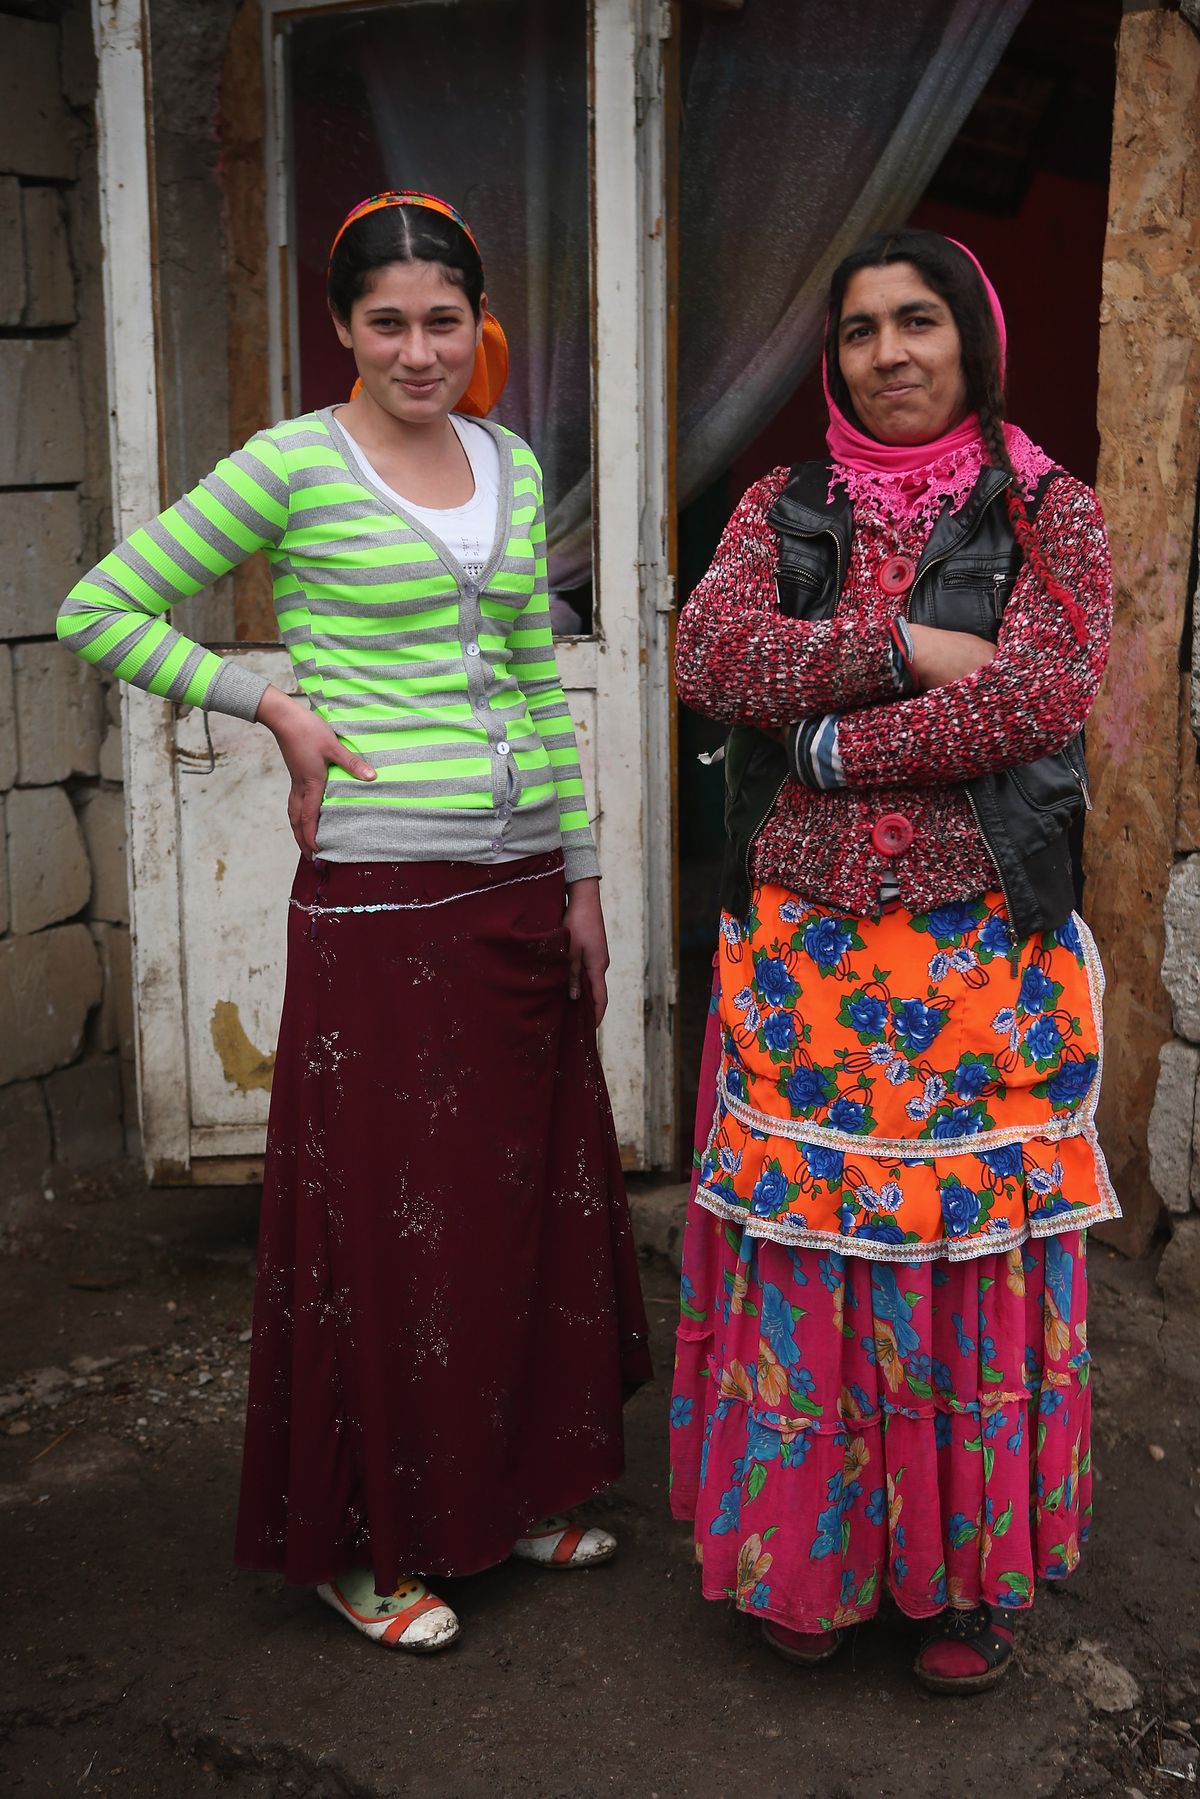 'Gypsy Sisters' kan ikke vise hele kulturen